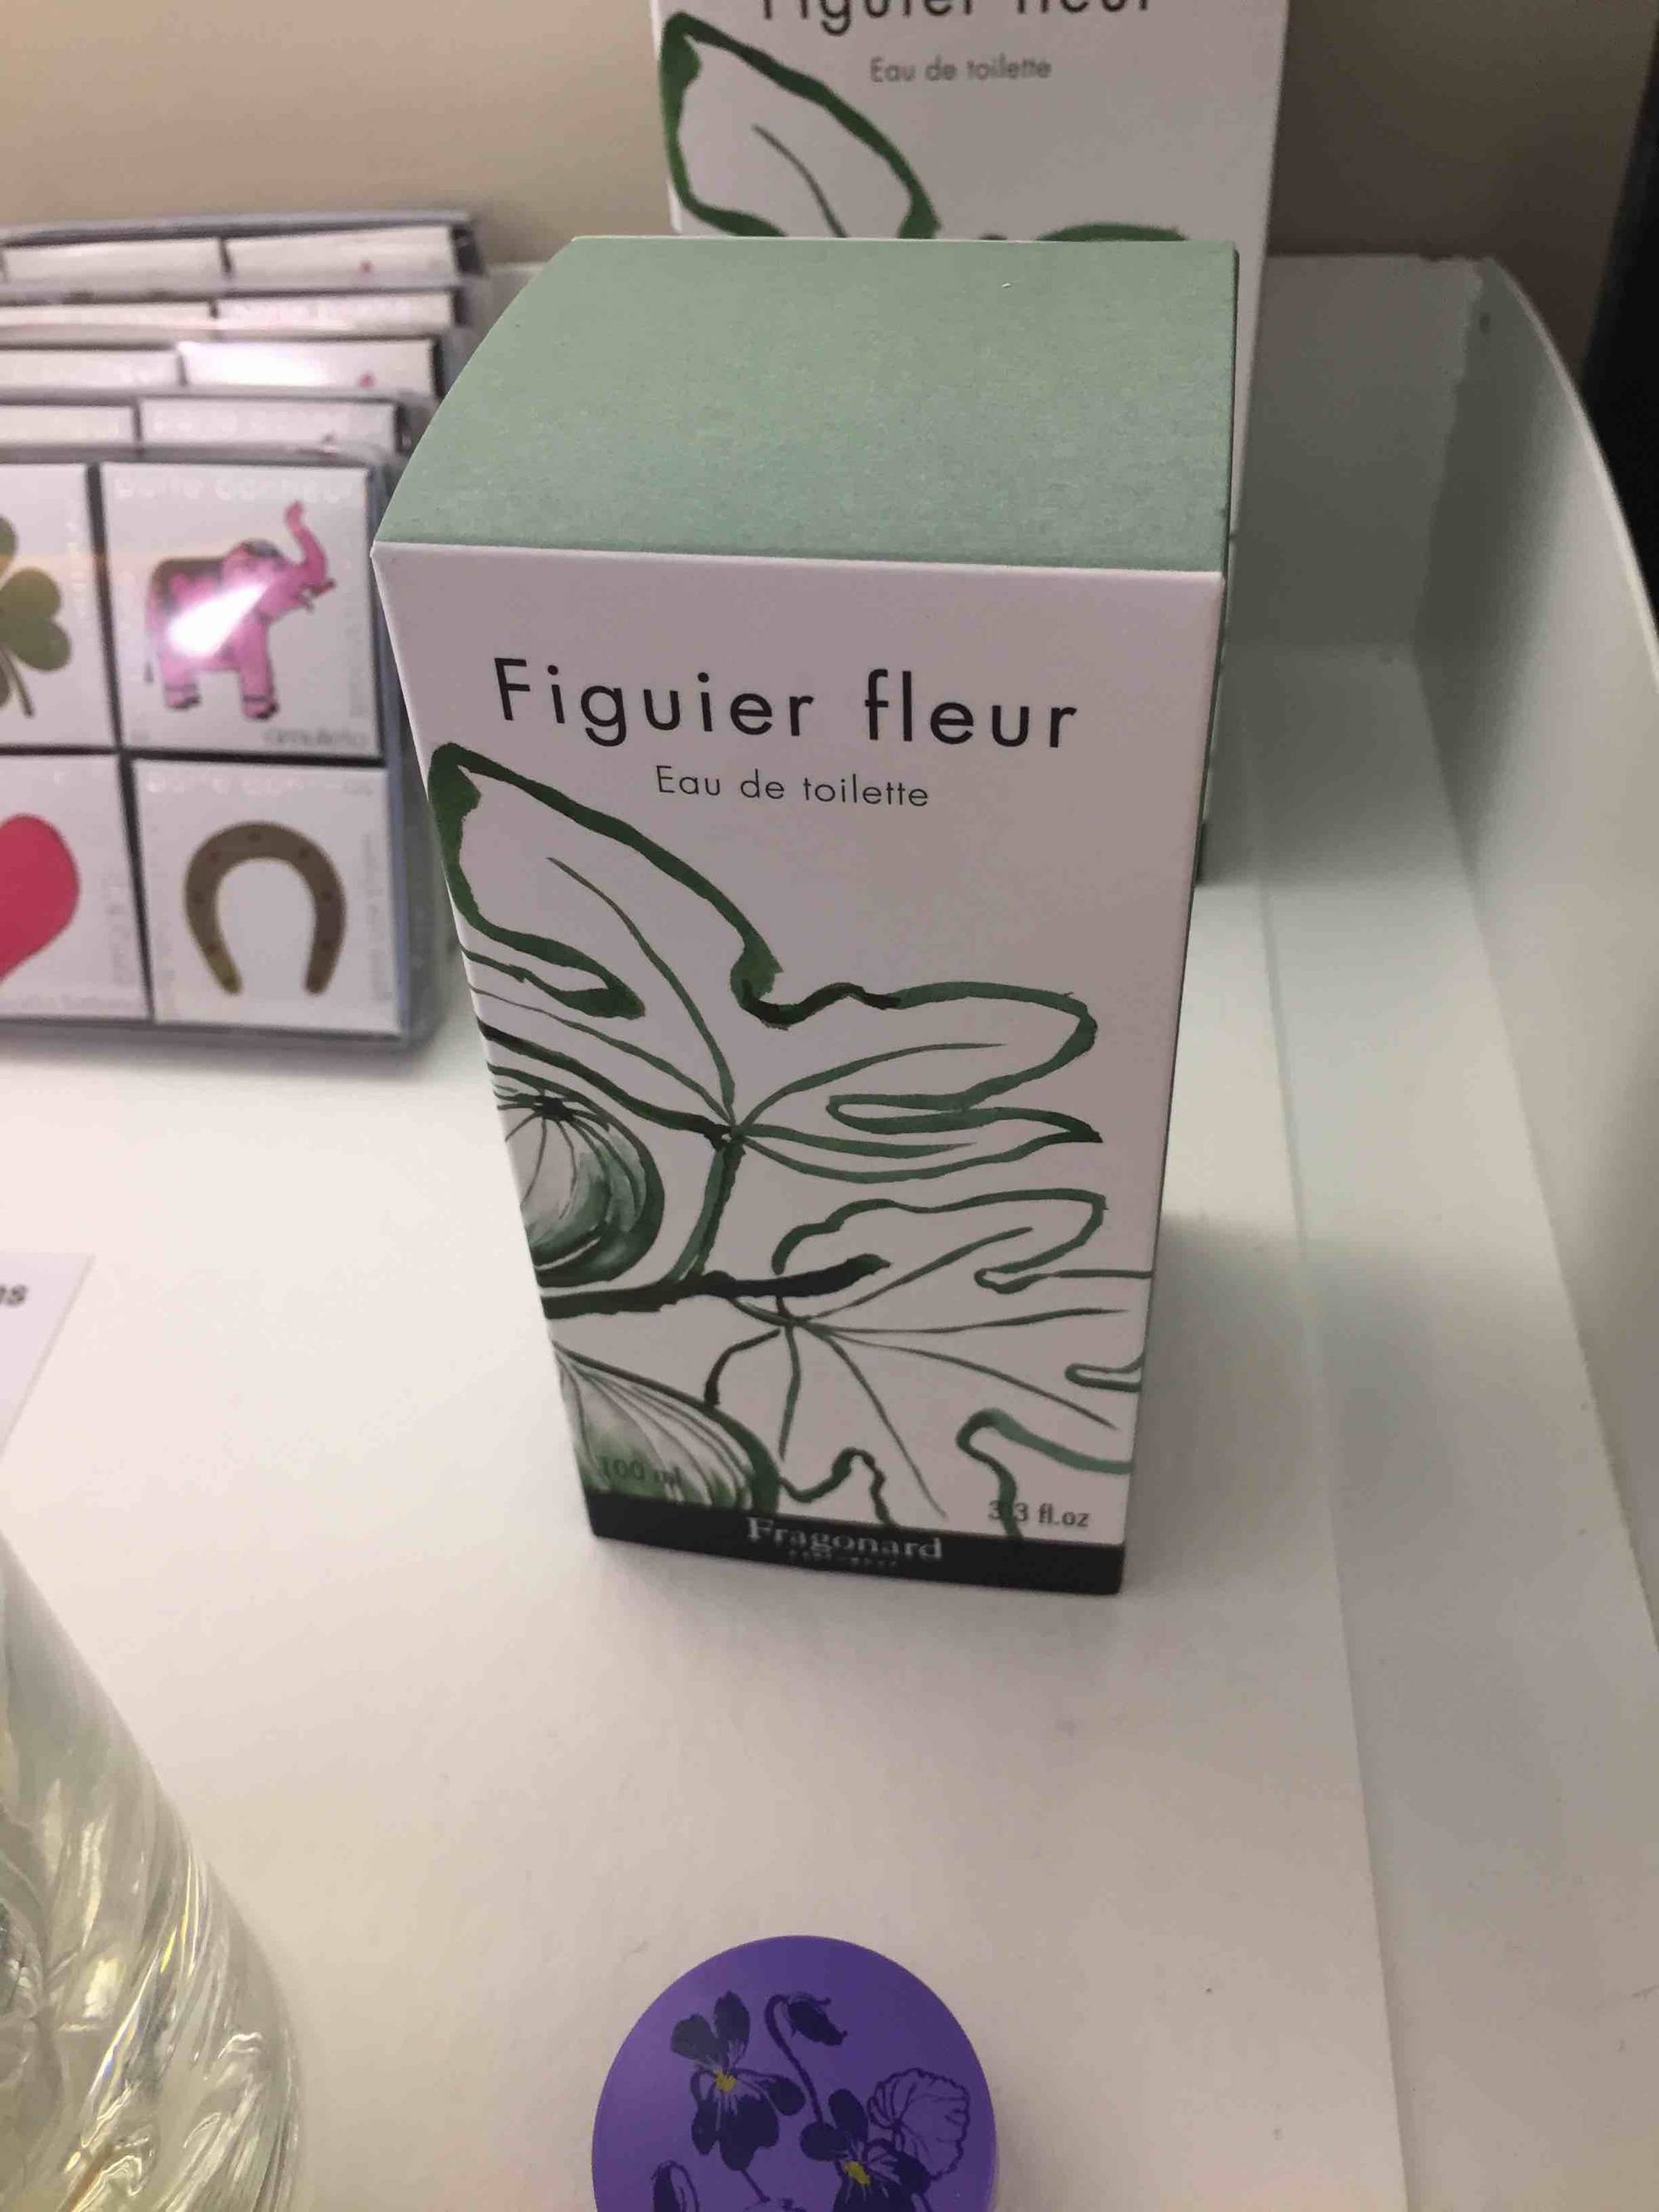 FRAGONARD - Figuier fleur - Eau de toilette